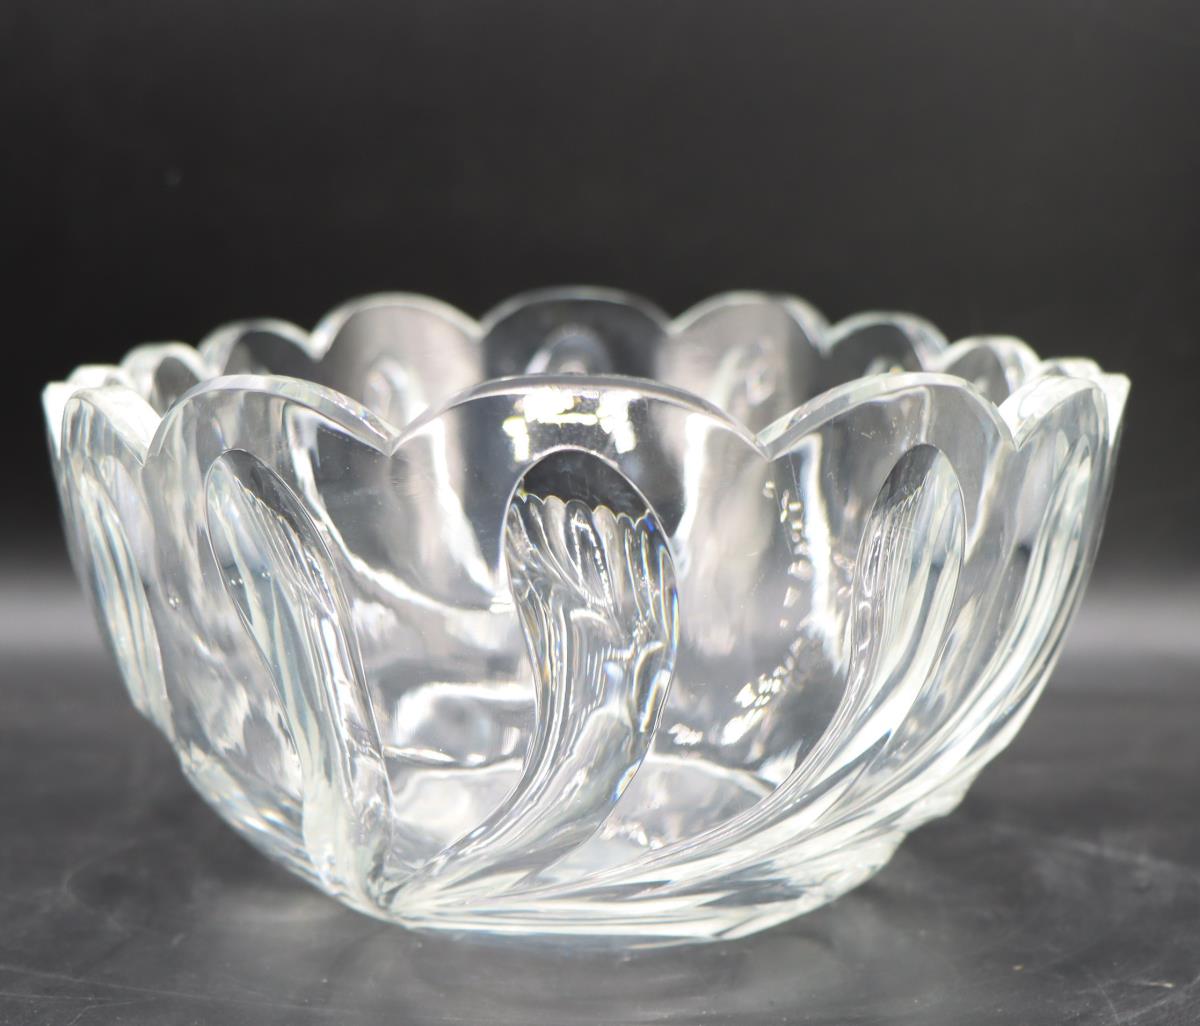 Steuben Crystal Glass Bowl - Image 3 of 3